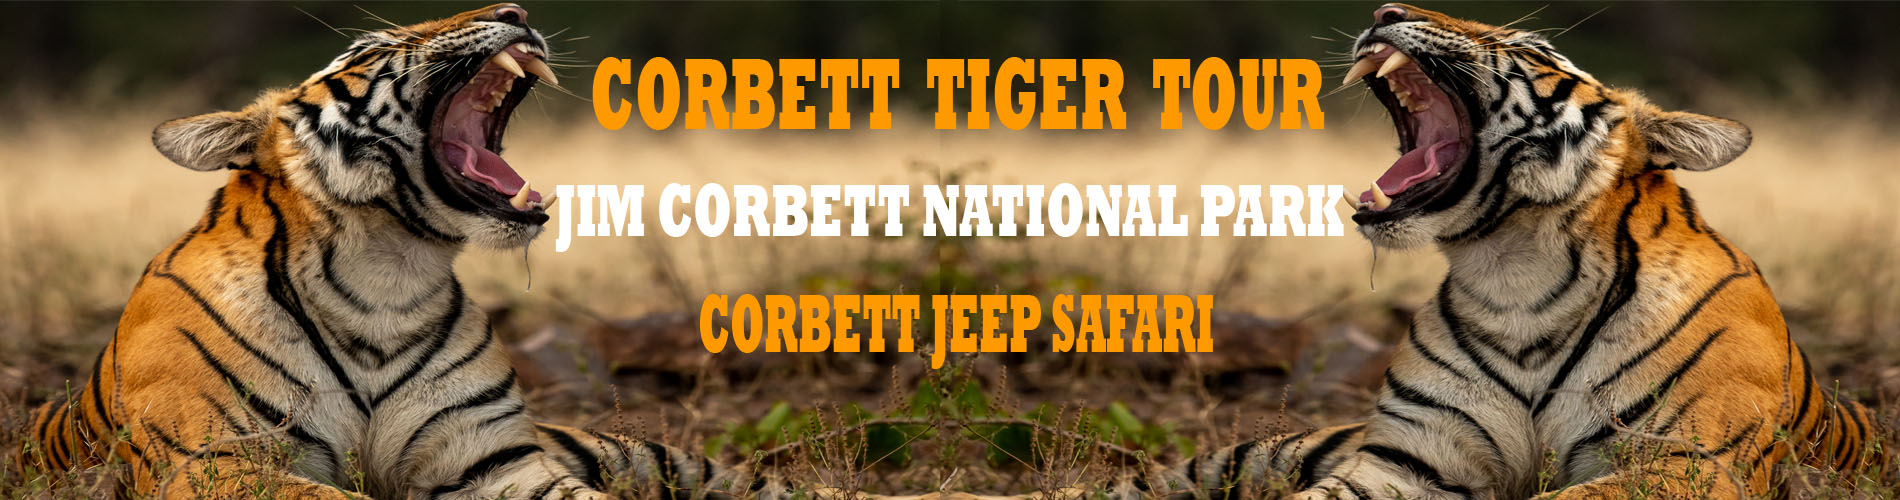 corbett tiger jeep safari